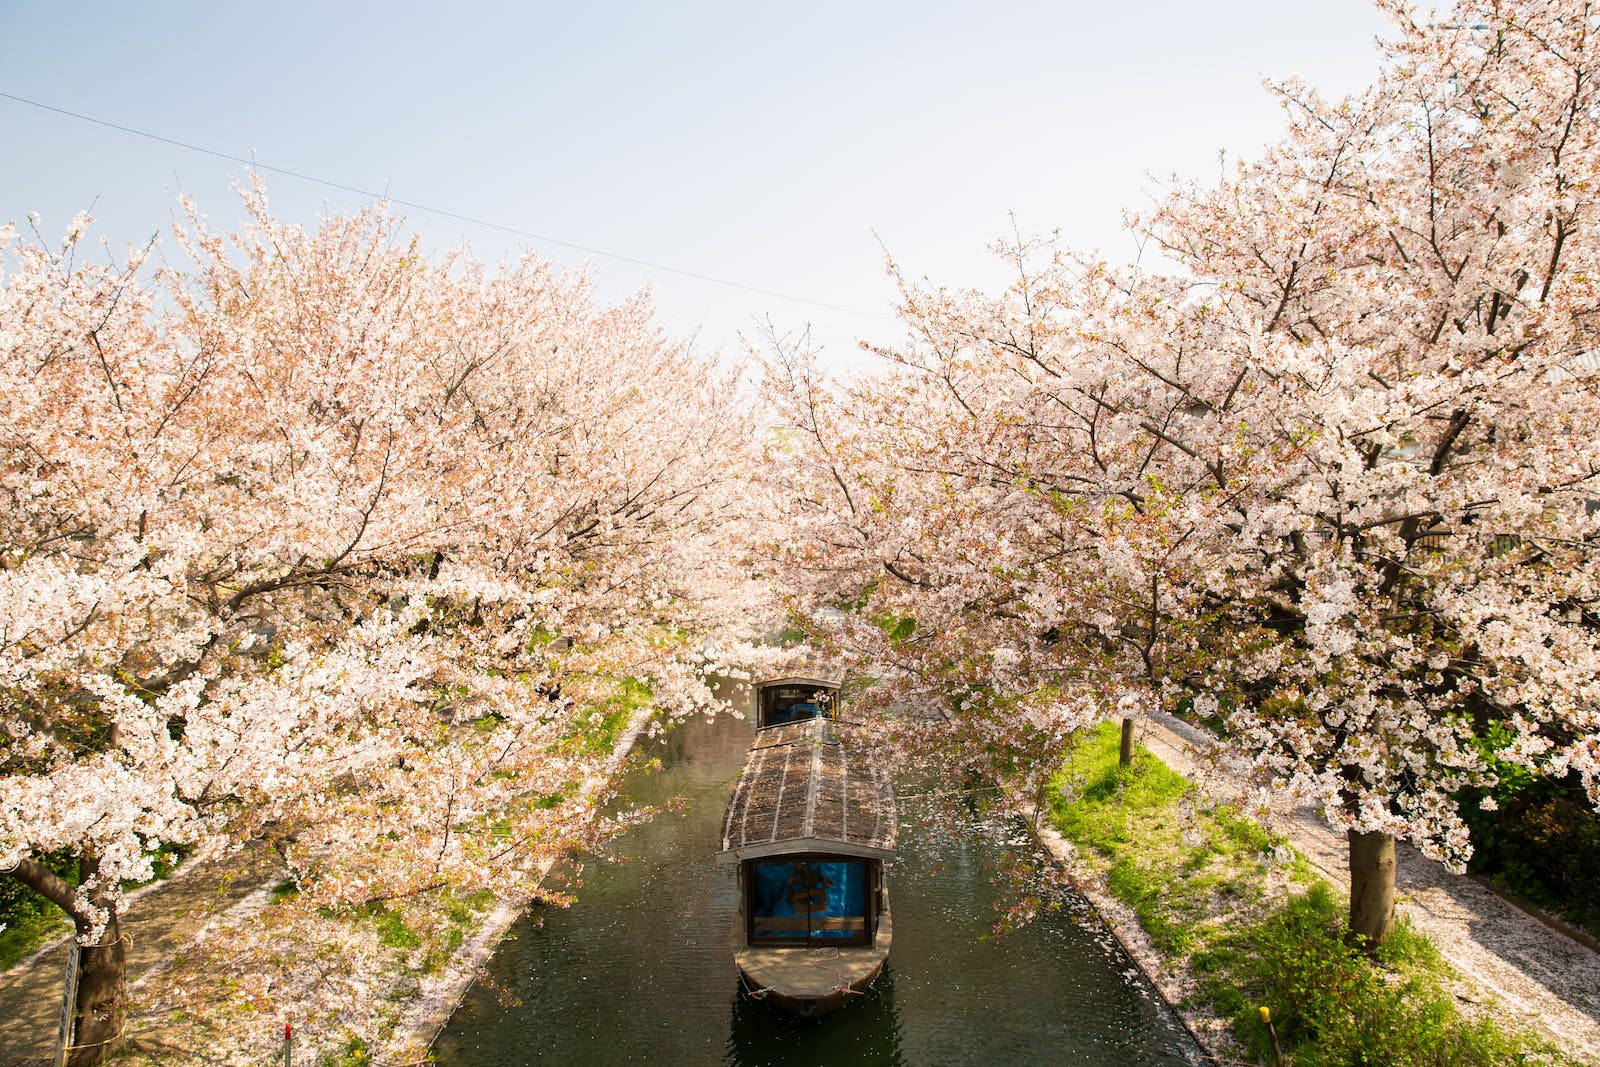 Boats Travel Under Japanese Sakura